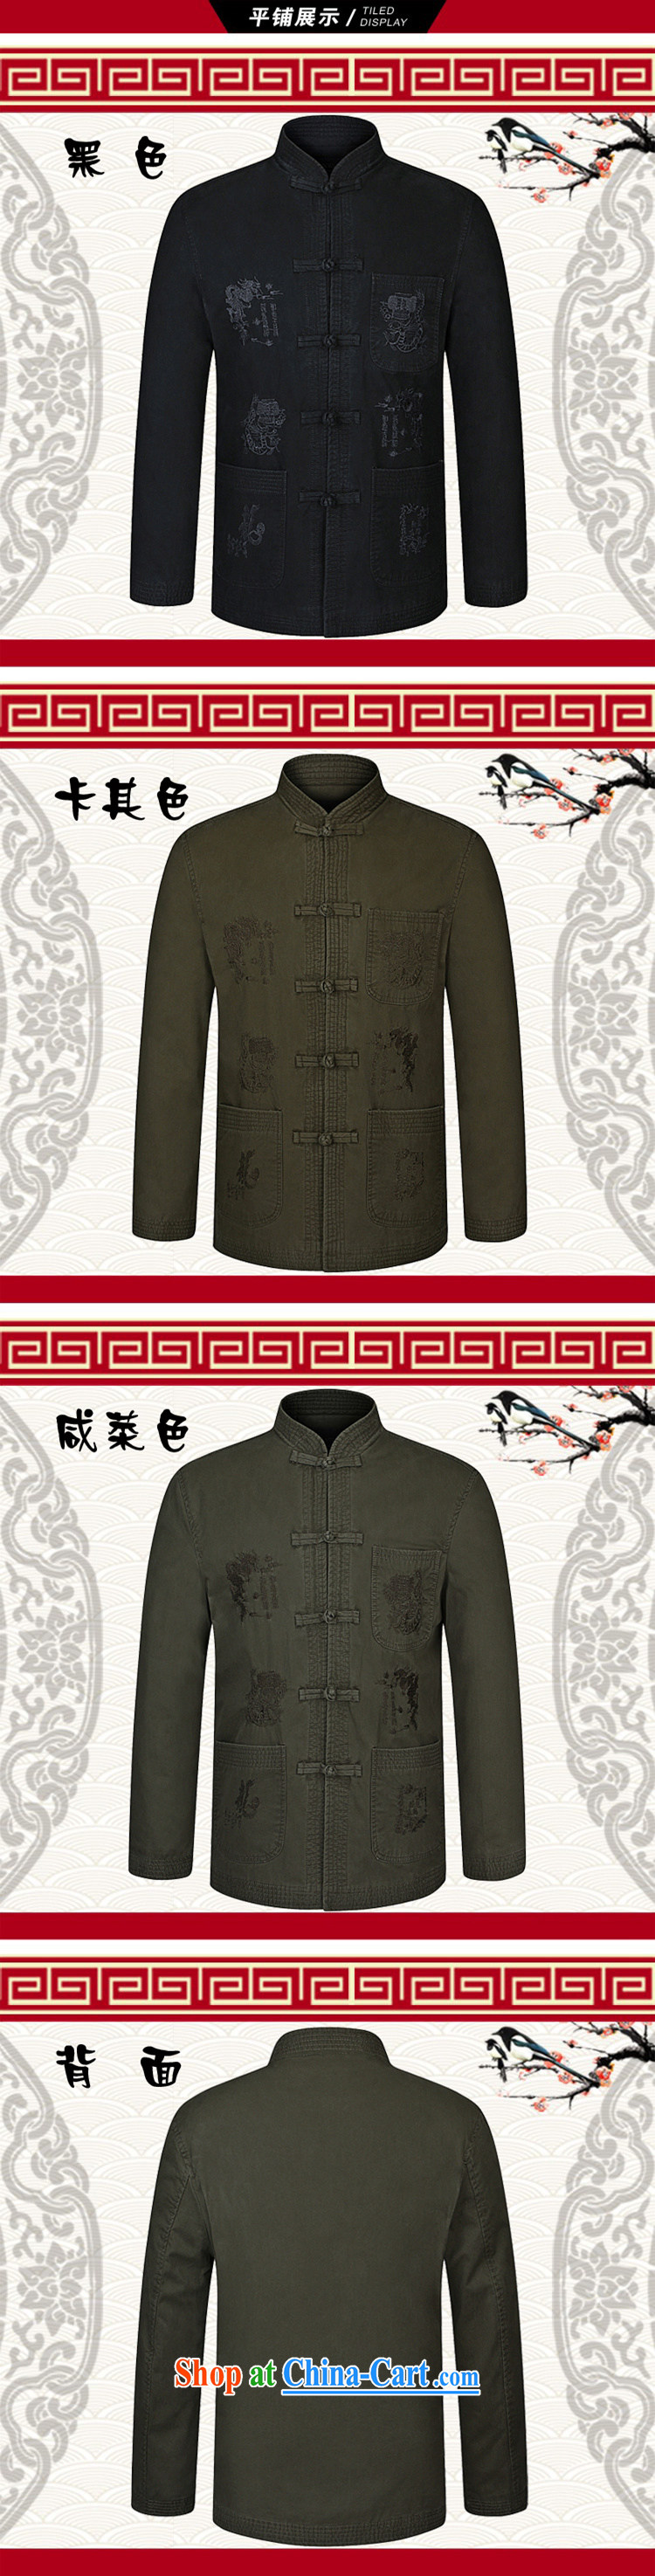 Bong-ki Paul spring loaded male Chinese, for Tang jackets, long-sleeved older birthday life thick winter parka brigades